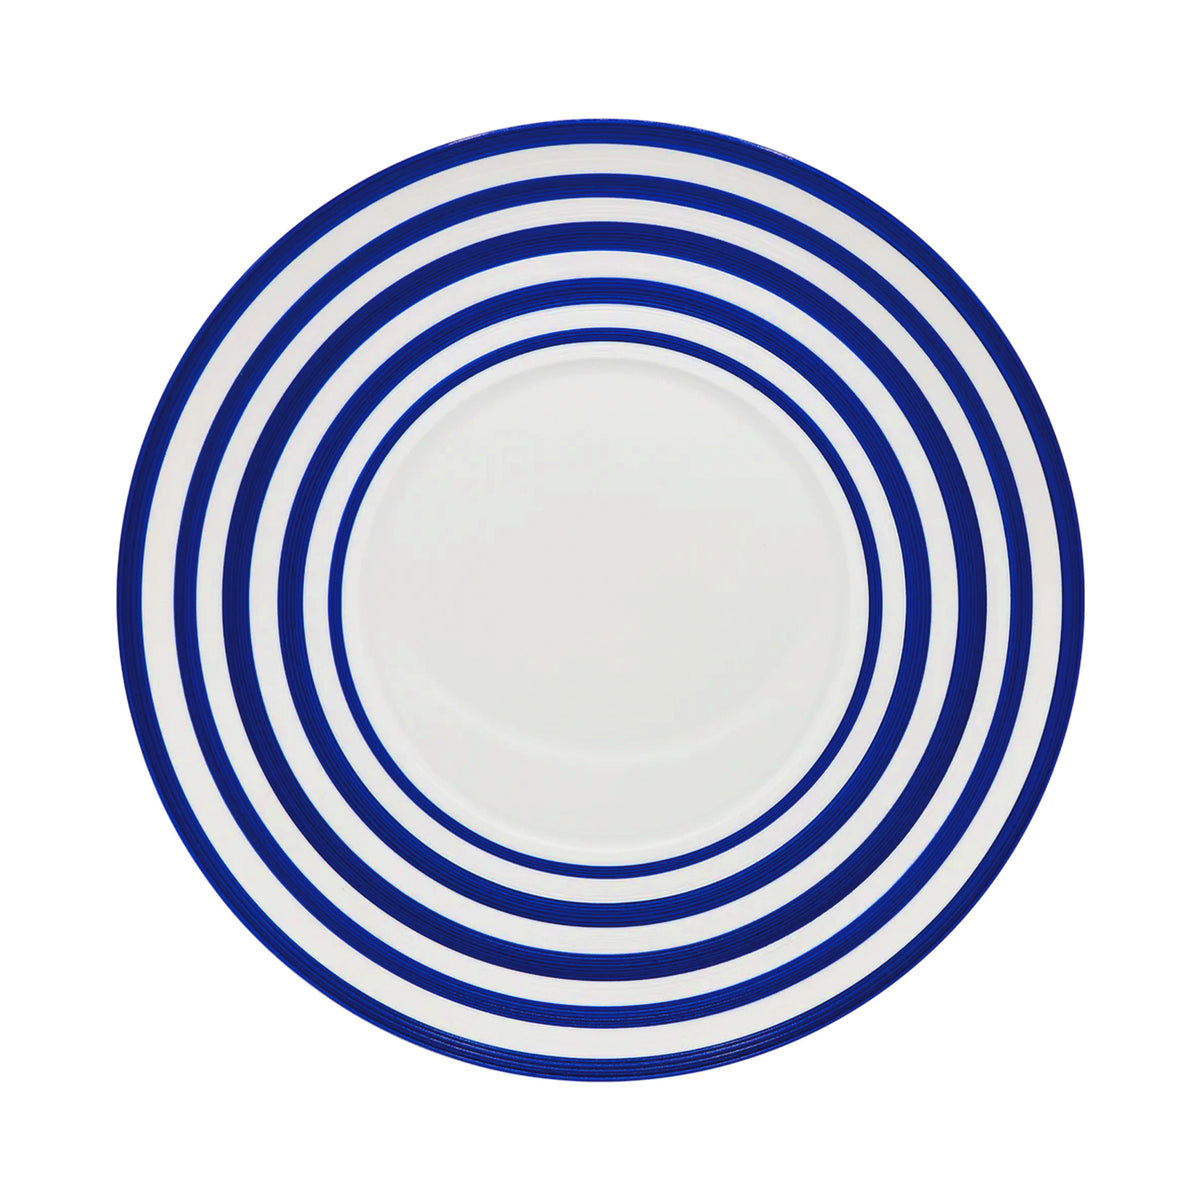 HEMISPHERE Striped Royal Blue - 29 cm plate